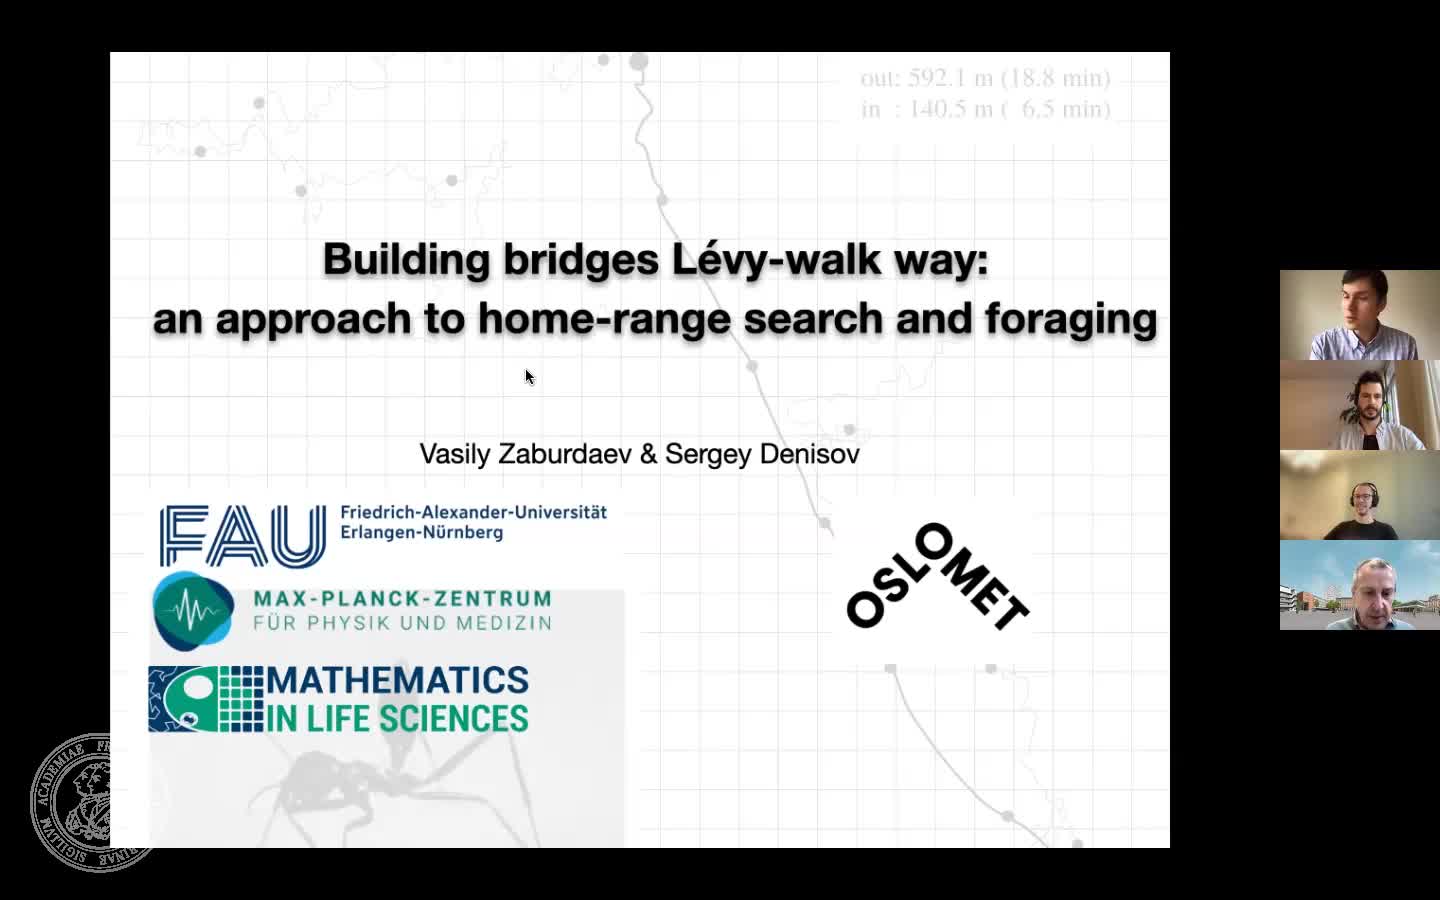 Building bridges Lévy-walk way (V. Zaburdaev, FAU) preview image